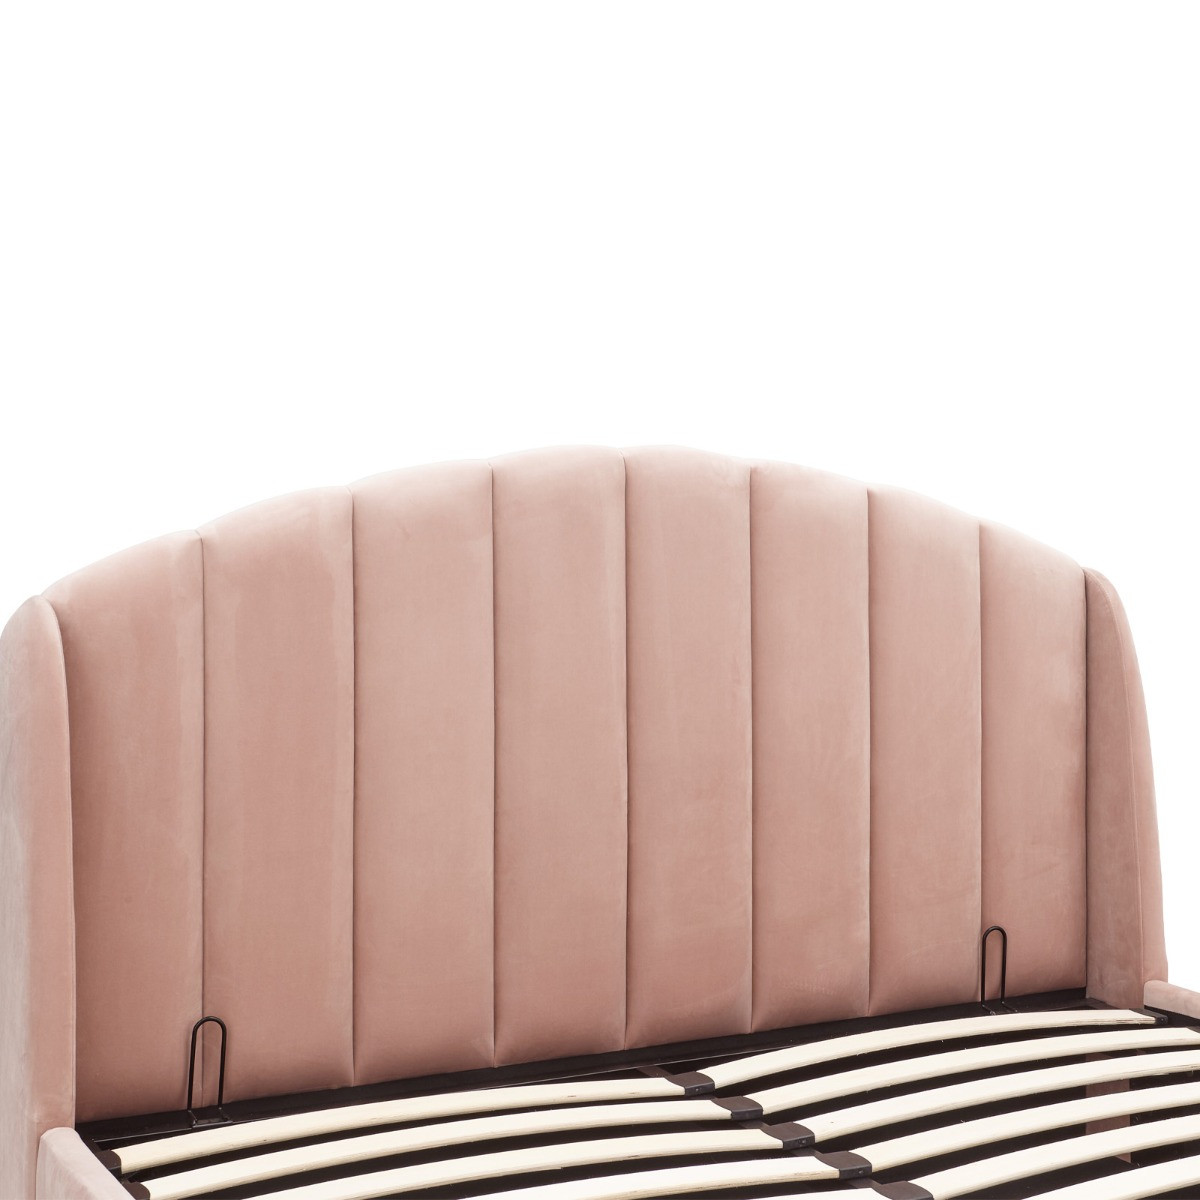 Pettine End Lift Ottoman Storage Bed, 5ft King - Blush Pink>